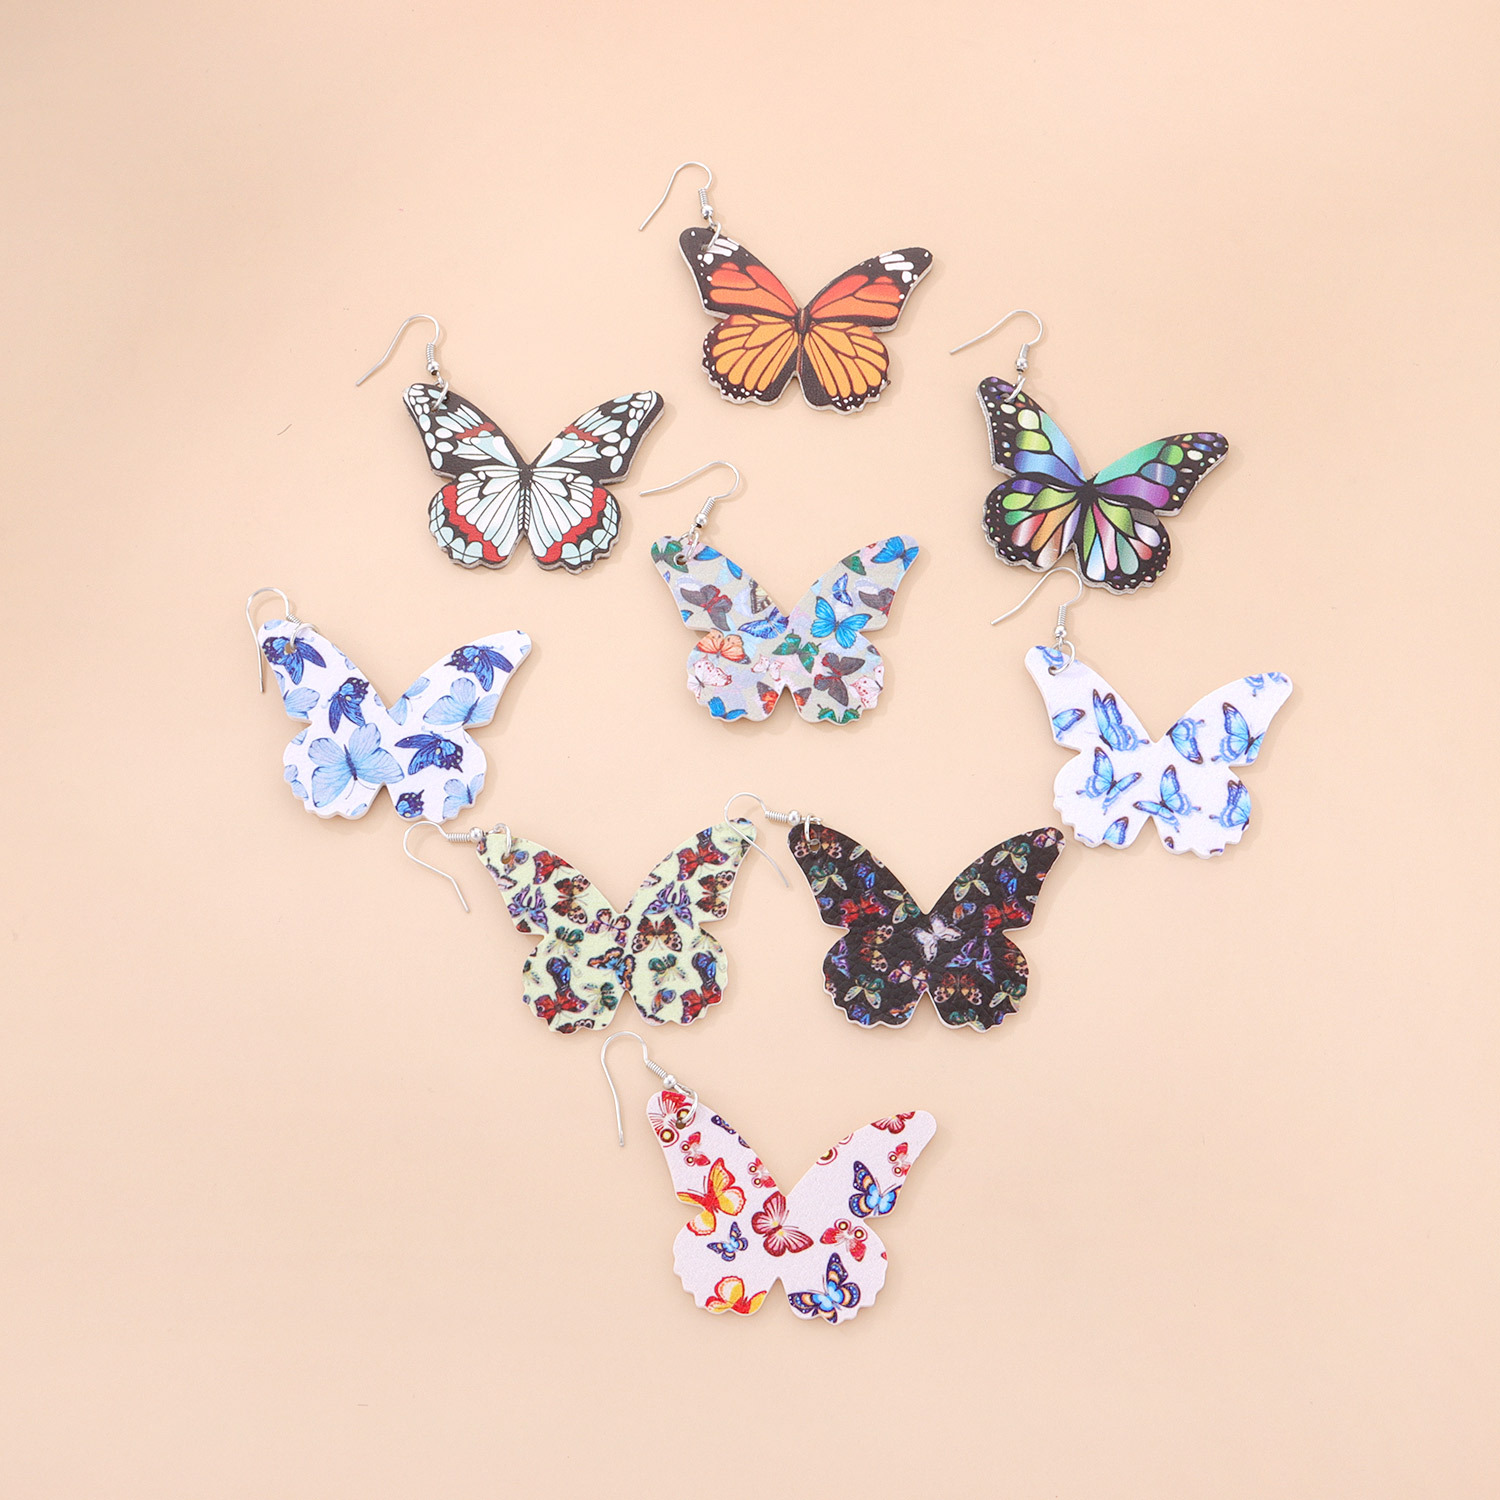 New Hot Lovely Simulation Butterfly Fashion Earrings For Women Girls